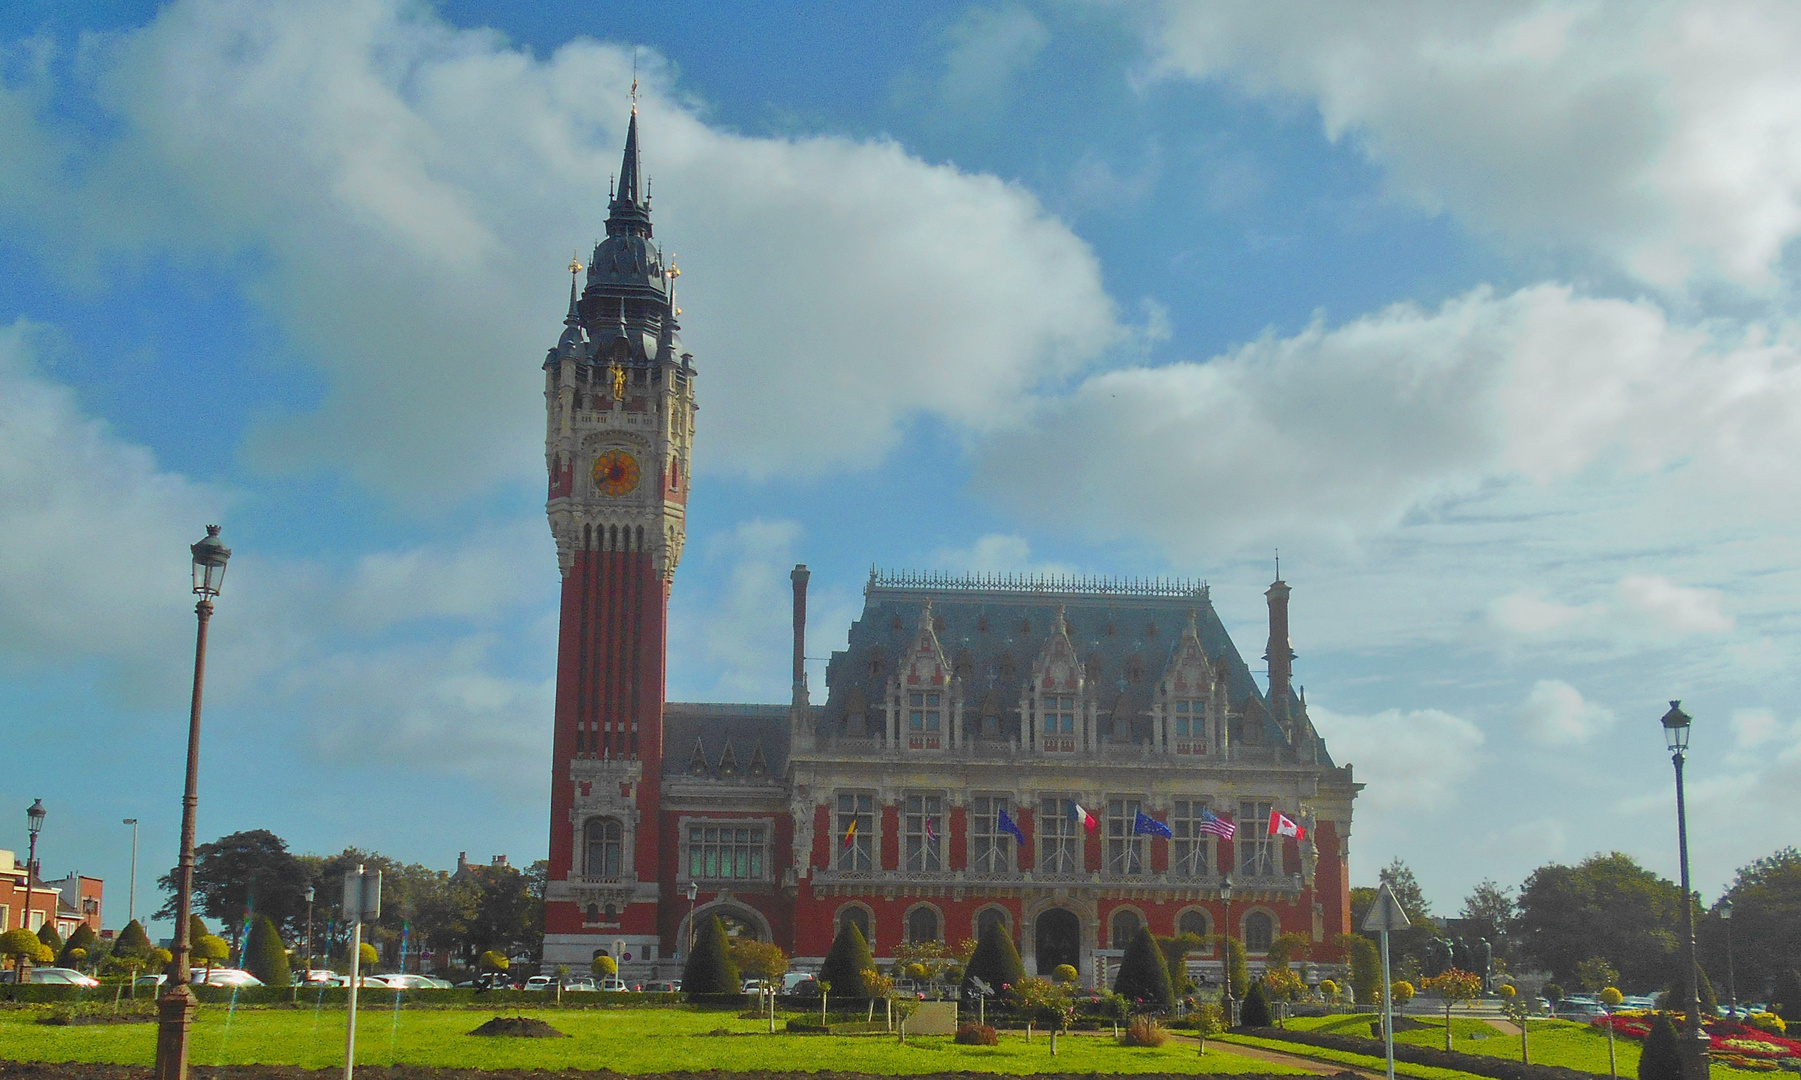 "Calais  City  Hall"